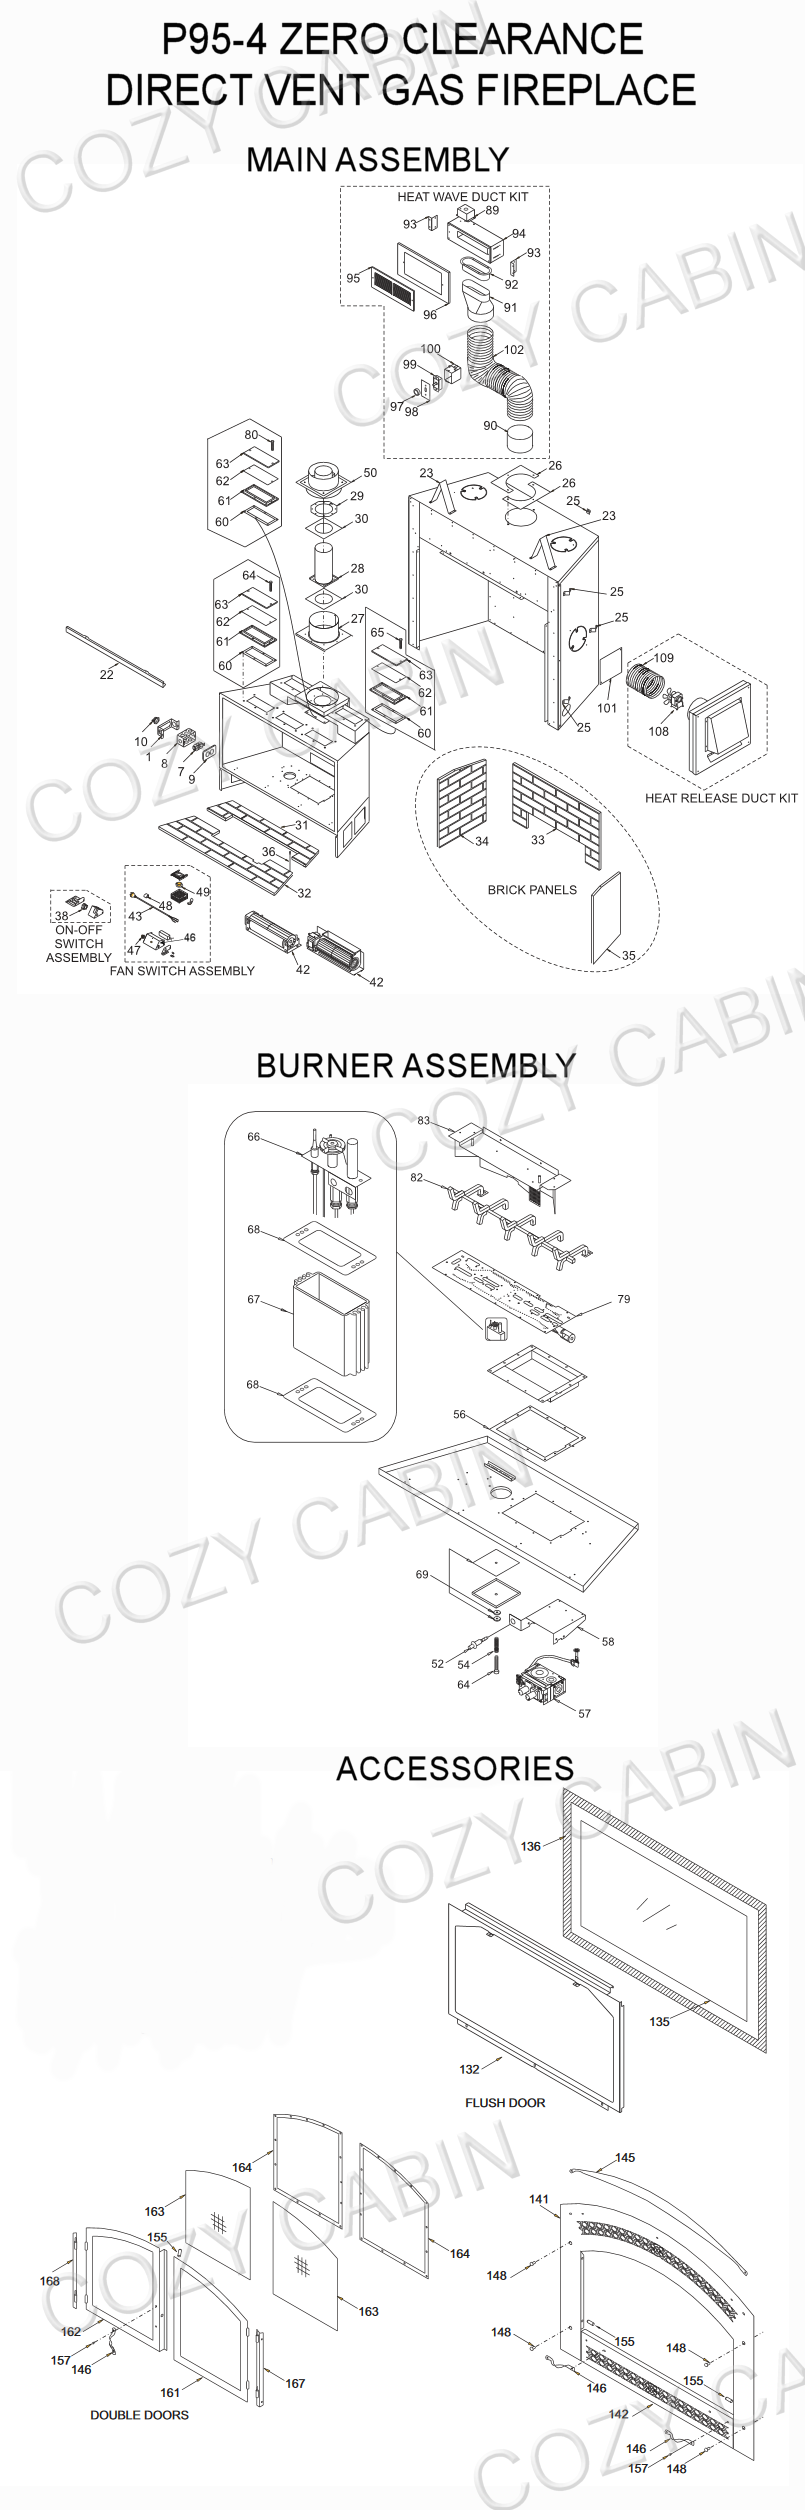 Excalibur Zero Clearance Direct Vent Gas Fireplace (P95-4) #P95-4